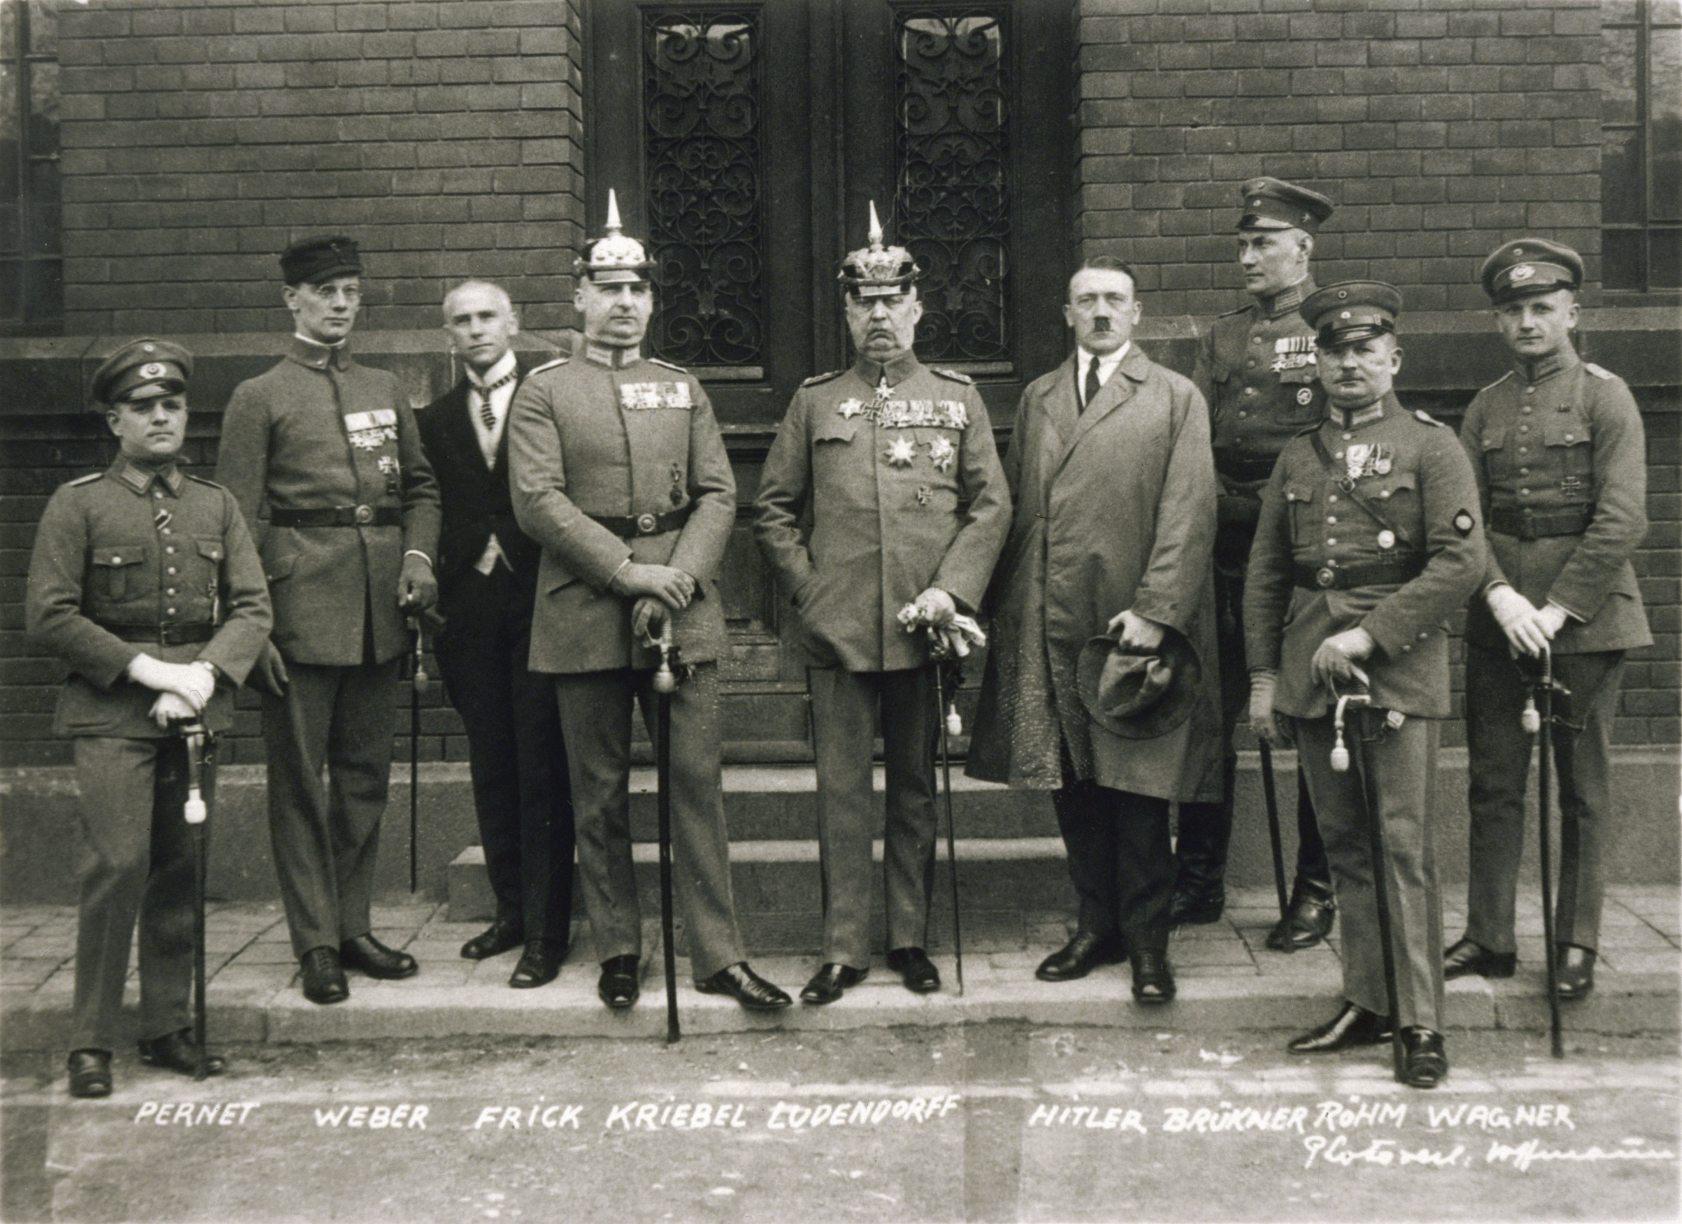 Defendants in the 1924 Beer Hall Putsch trial. From left to right: Pernet, Weber, Frick, Kriebel, Ludendorff, Hitler, Bruckner, Röhm, and Wagner.